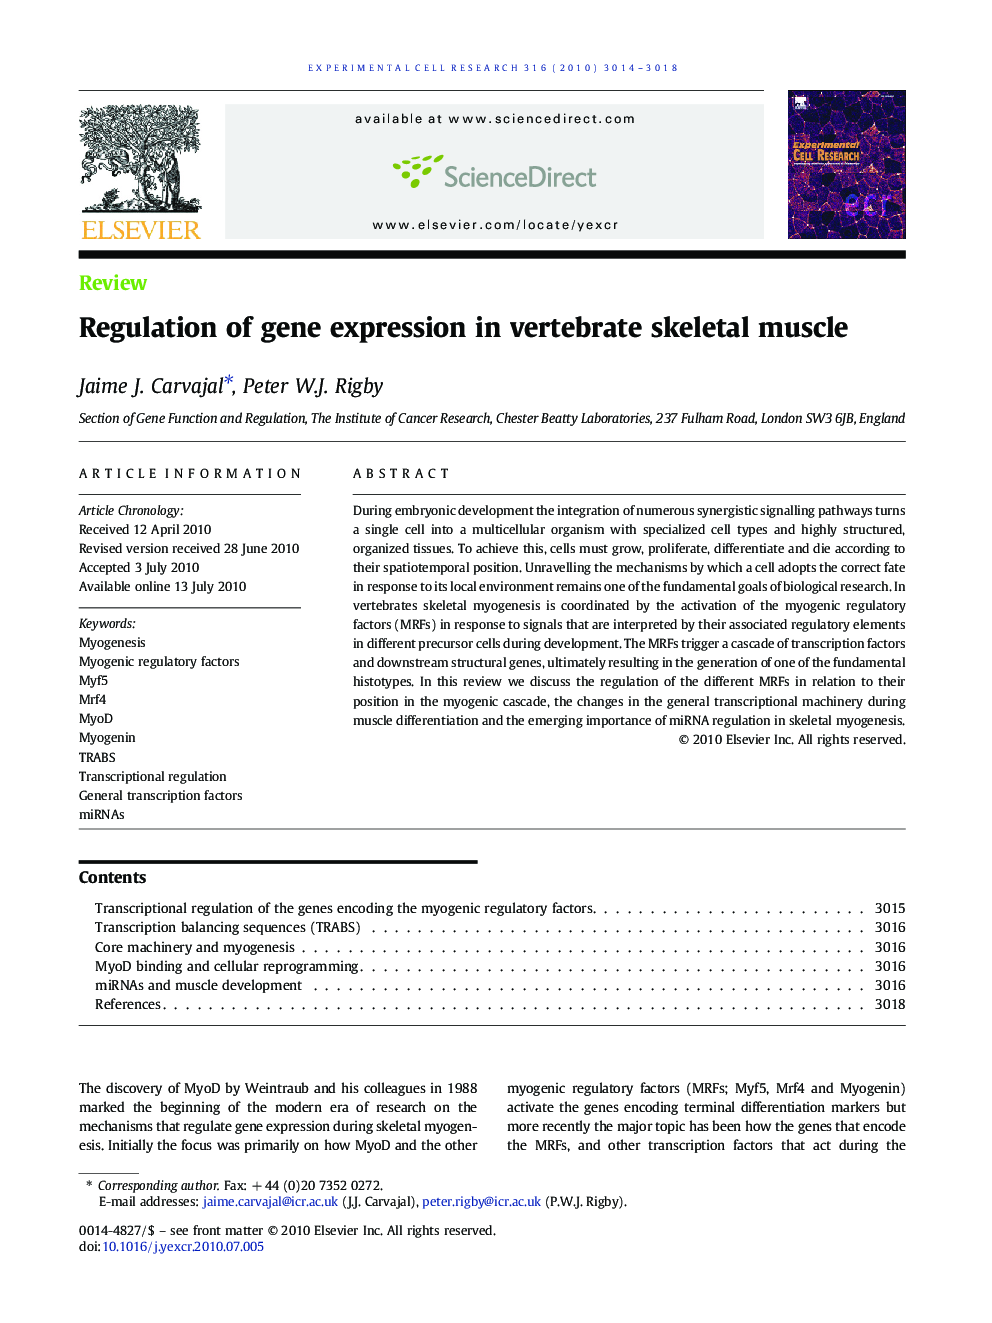 Regulation of gene expression in vertebrate skeletal muscle